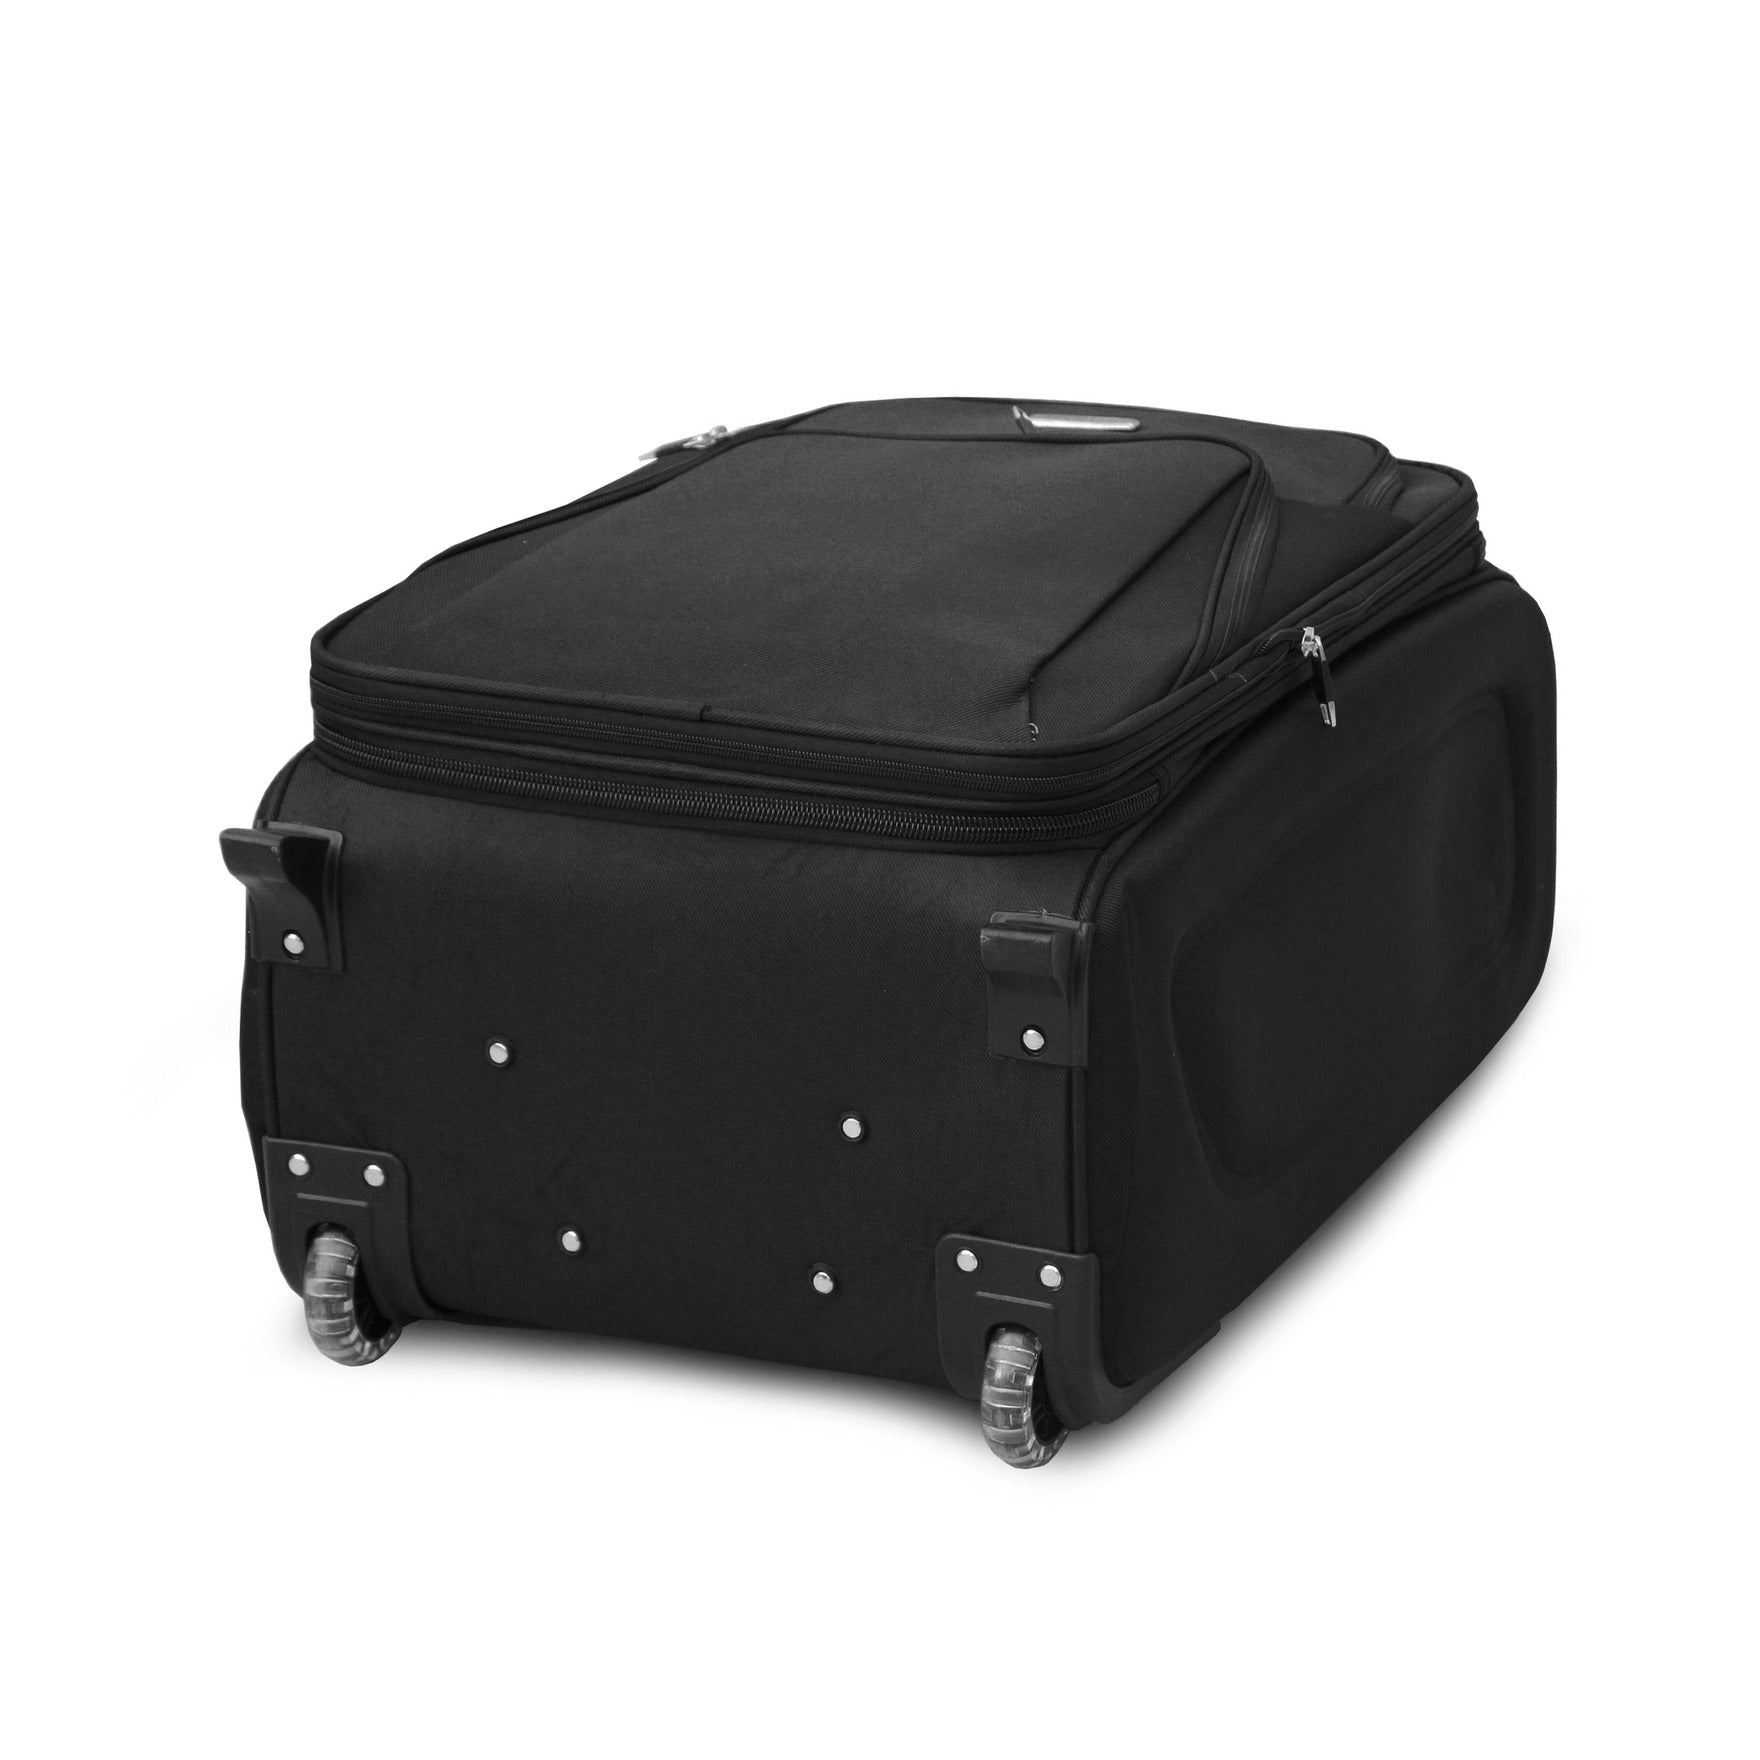 24" Black Colour SJ JIAN 2 Wheel Luggage Lightweight Soft Material Trolley Bag Zaappy.com